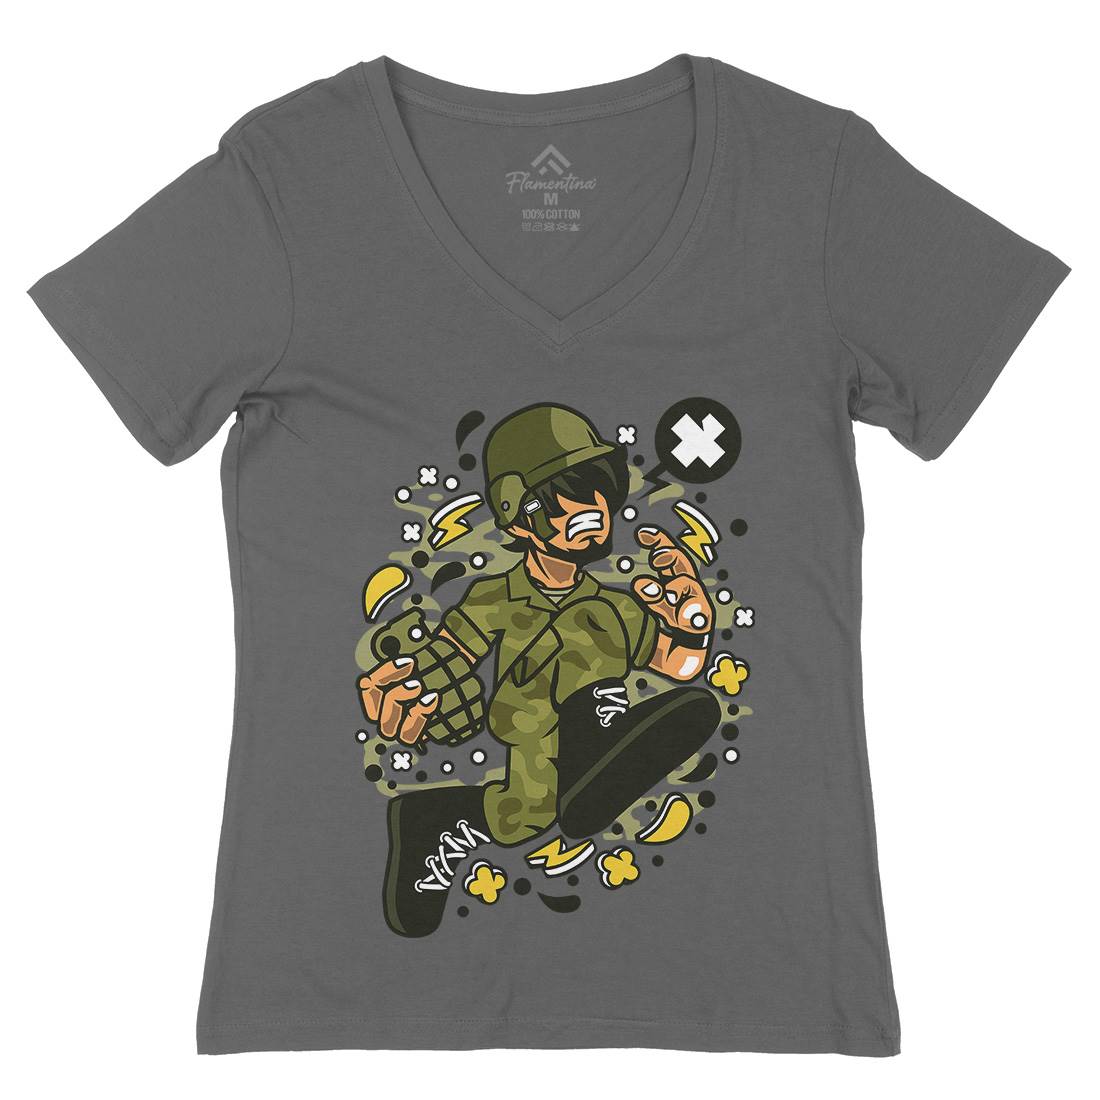 Soldier Running Womens Organic V-Neck T-Shirt Army C663